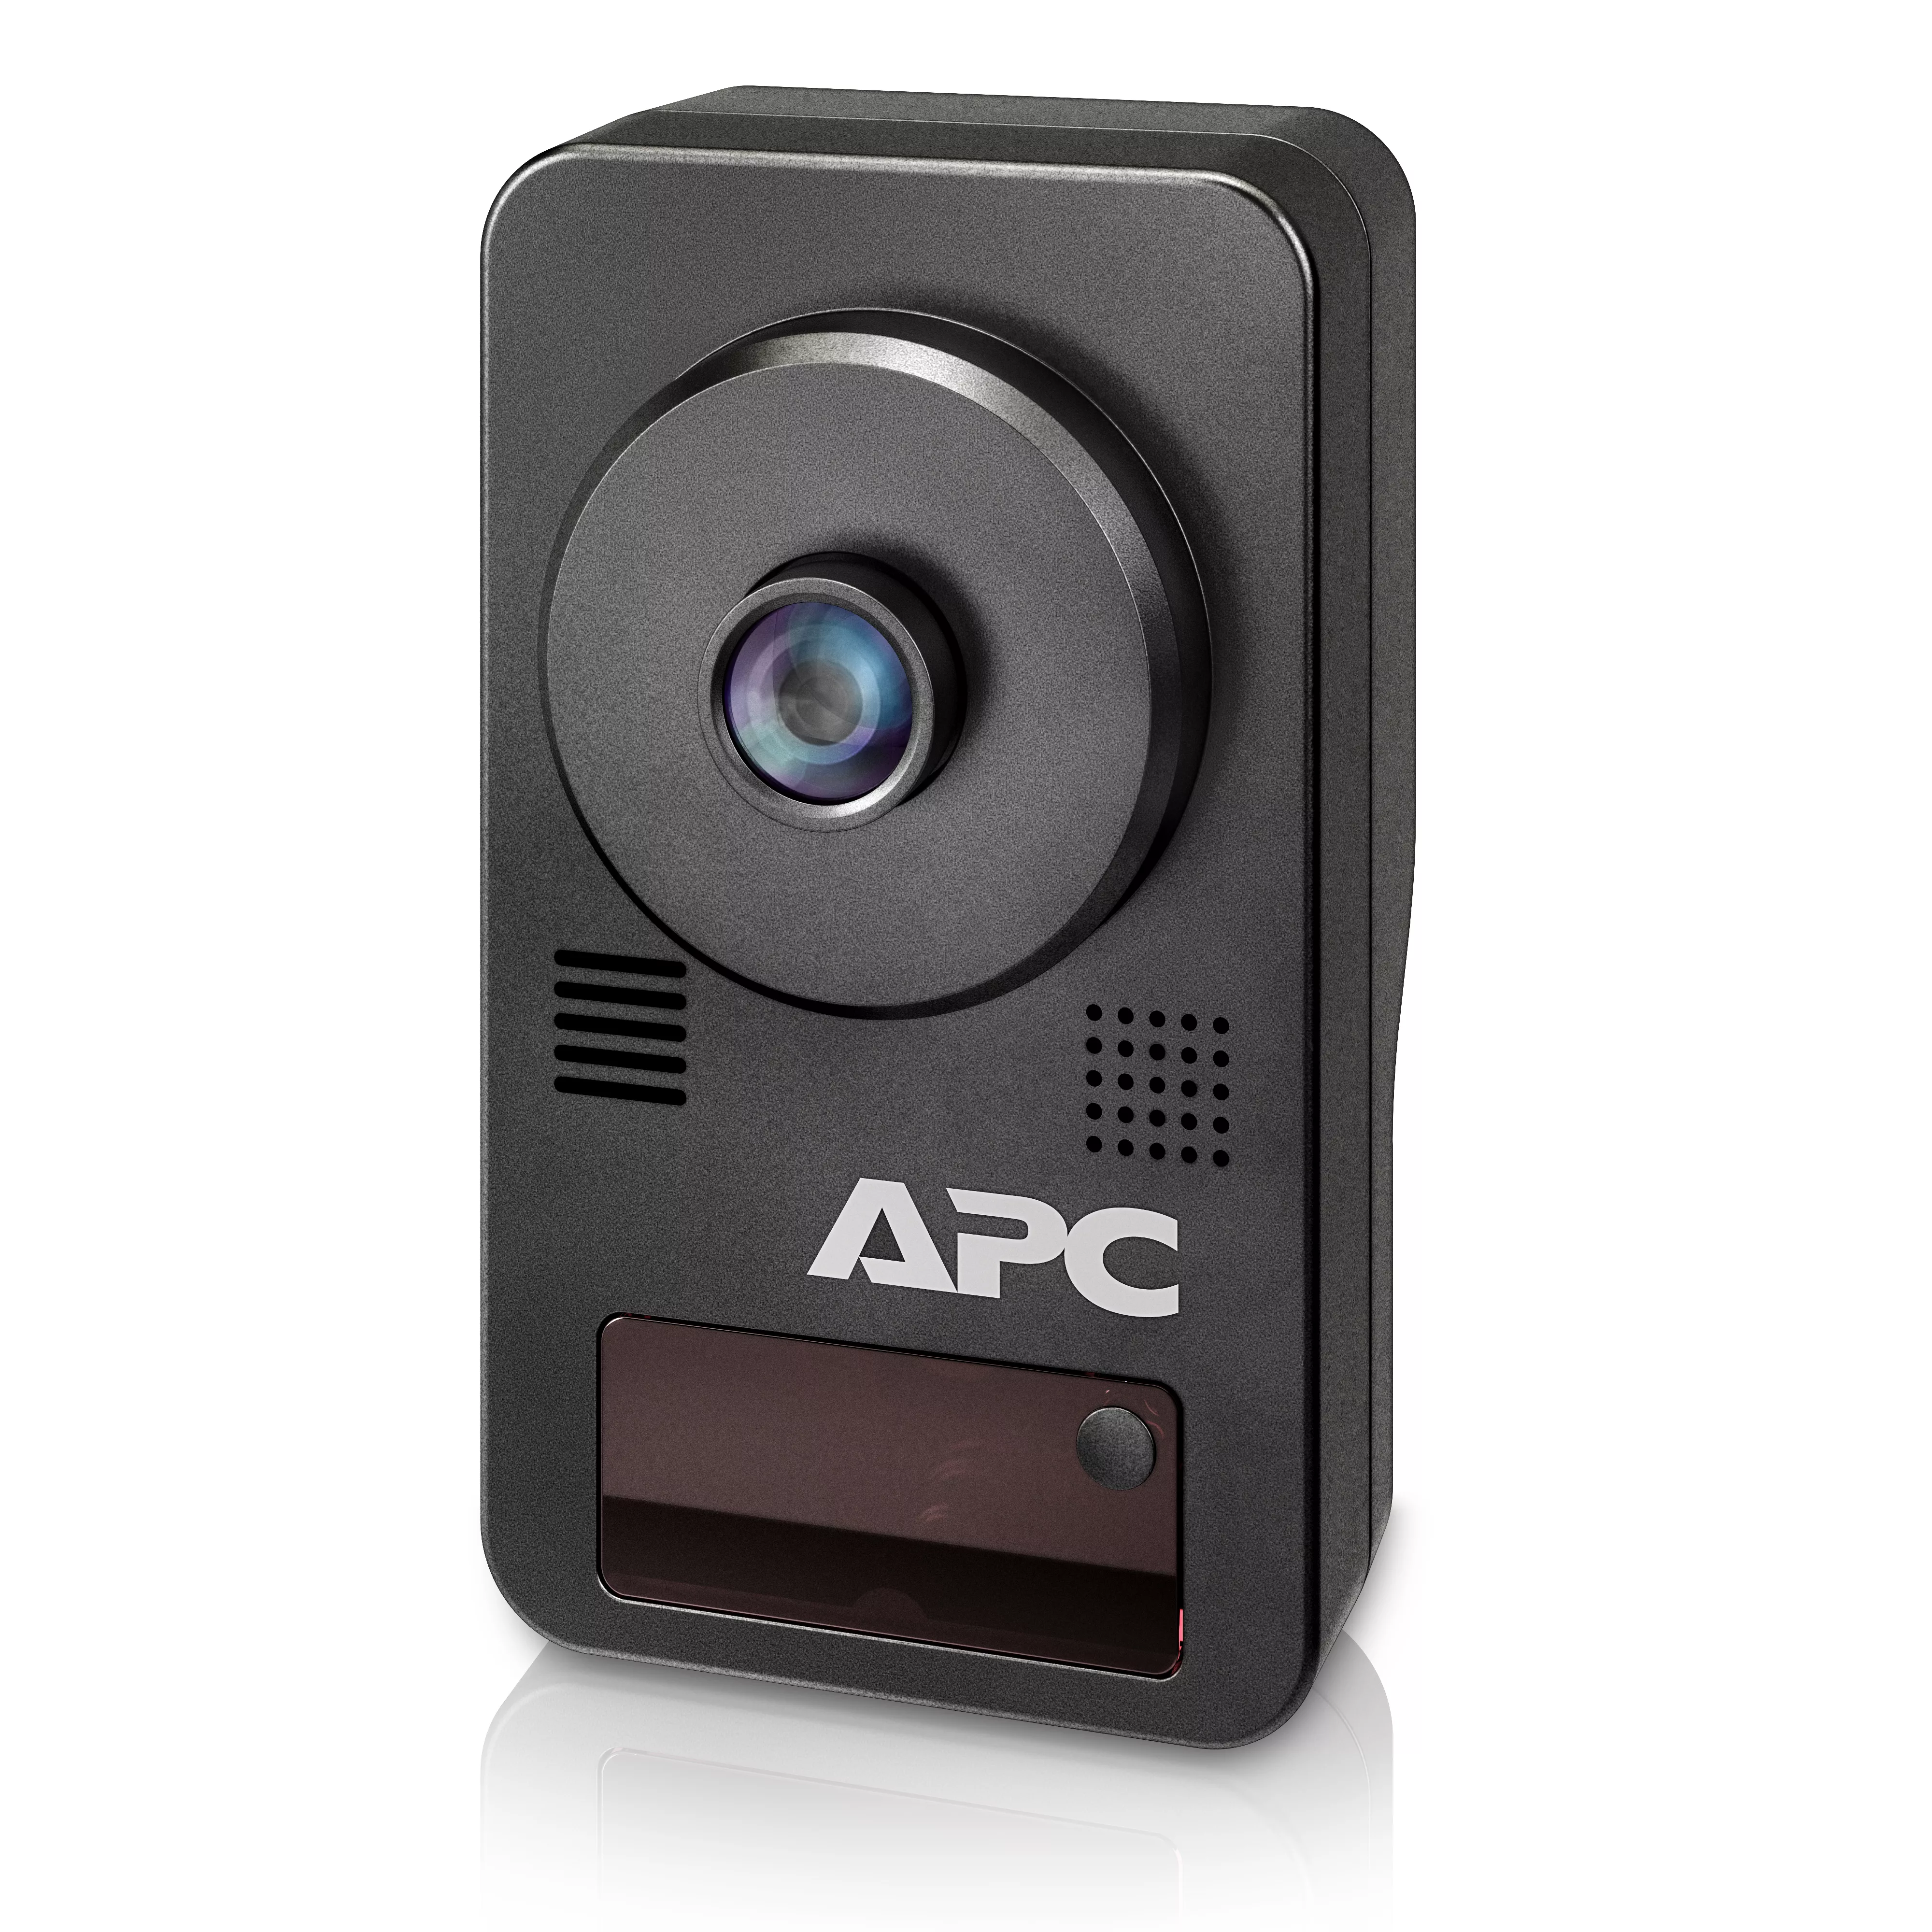 Achat APC NetBotz Camera Pod 165 et autres produits de la marque APC